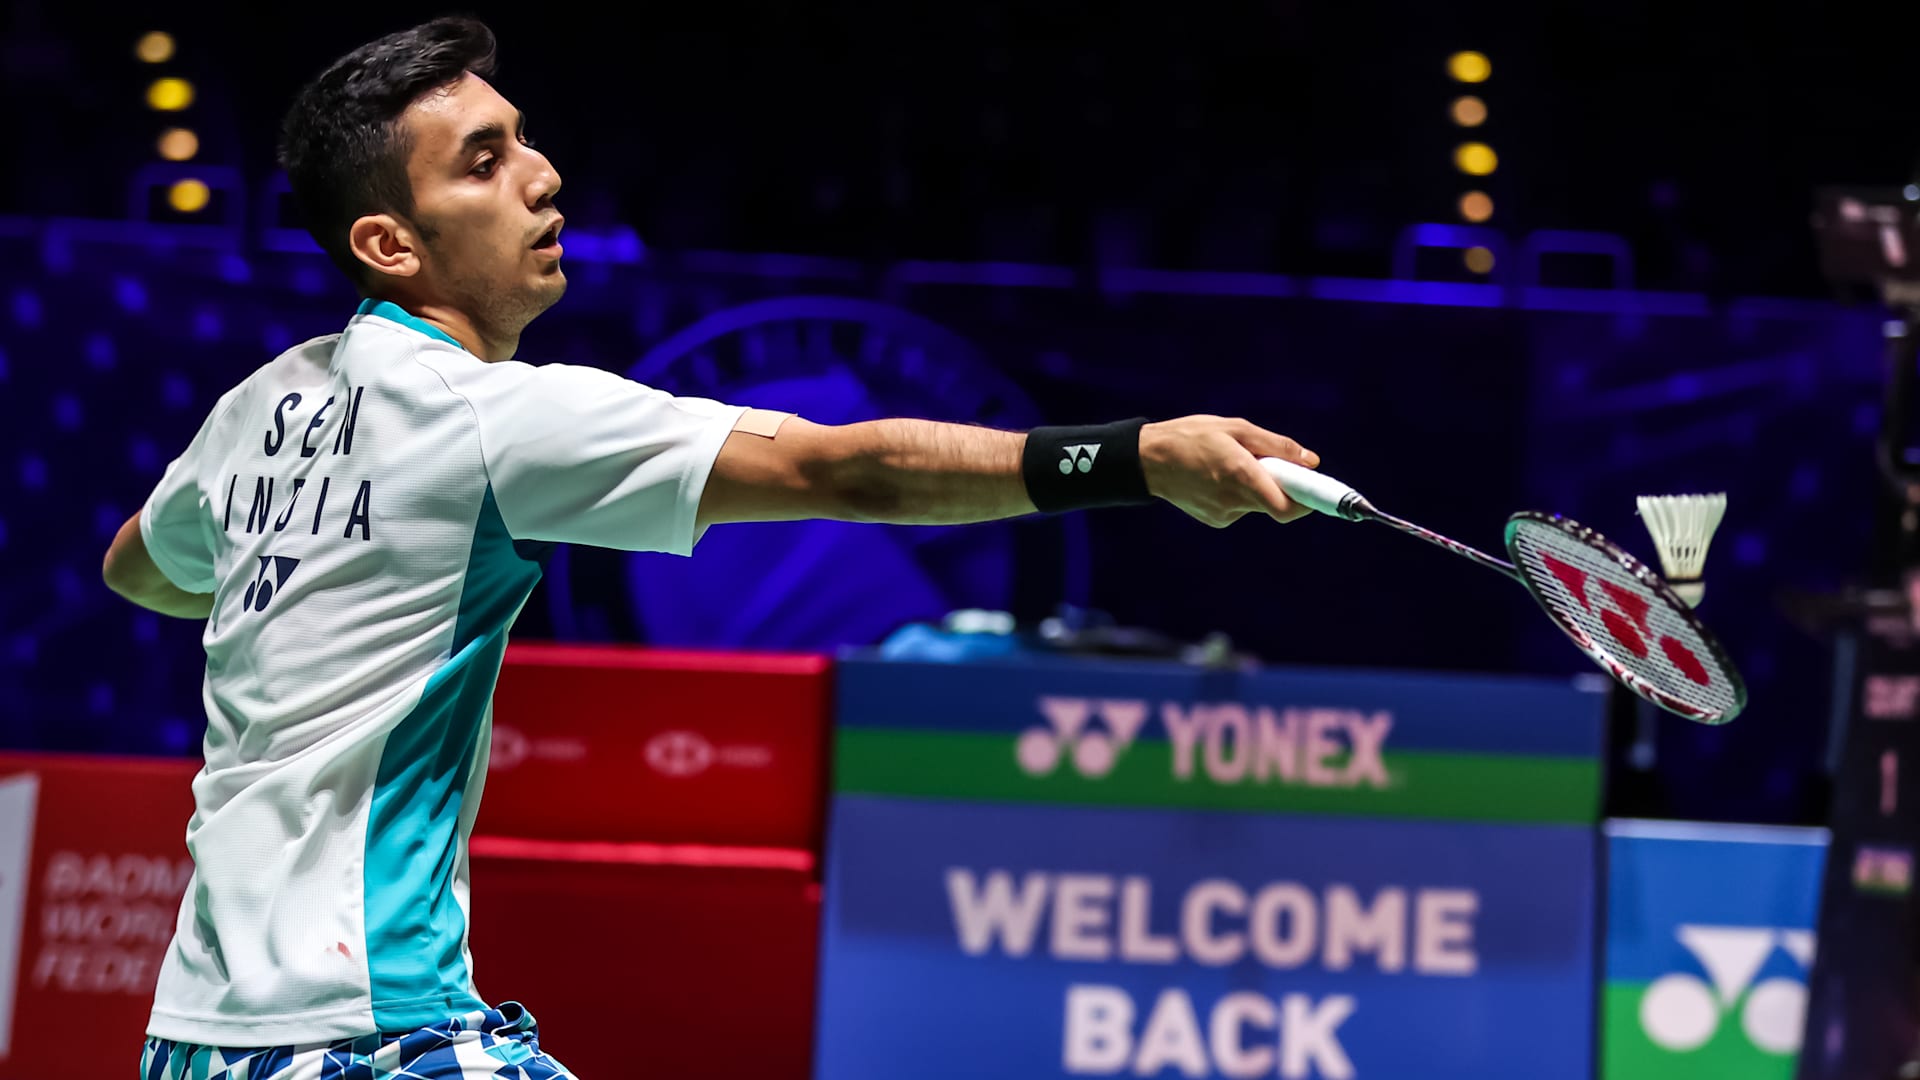 Denmark Open 2022 badminton Lakshya Sen loses in quarter-finals